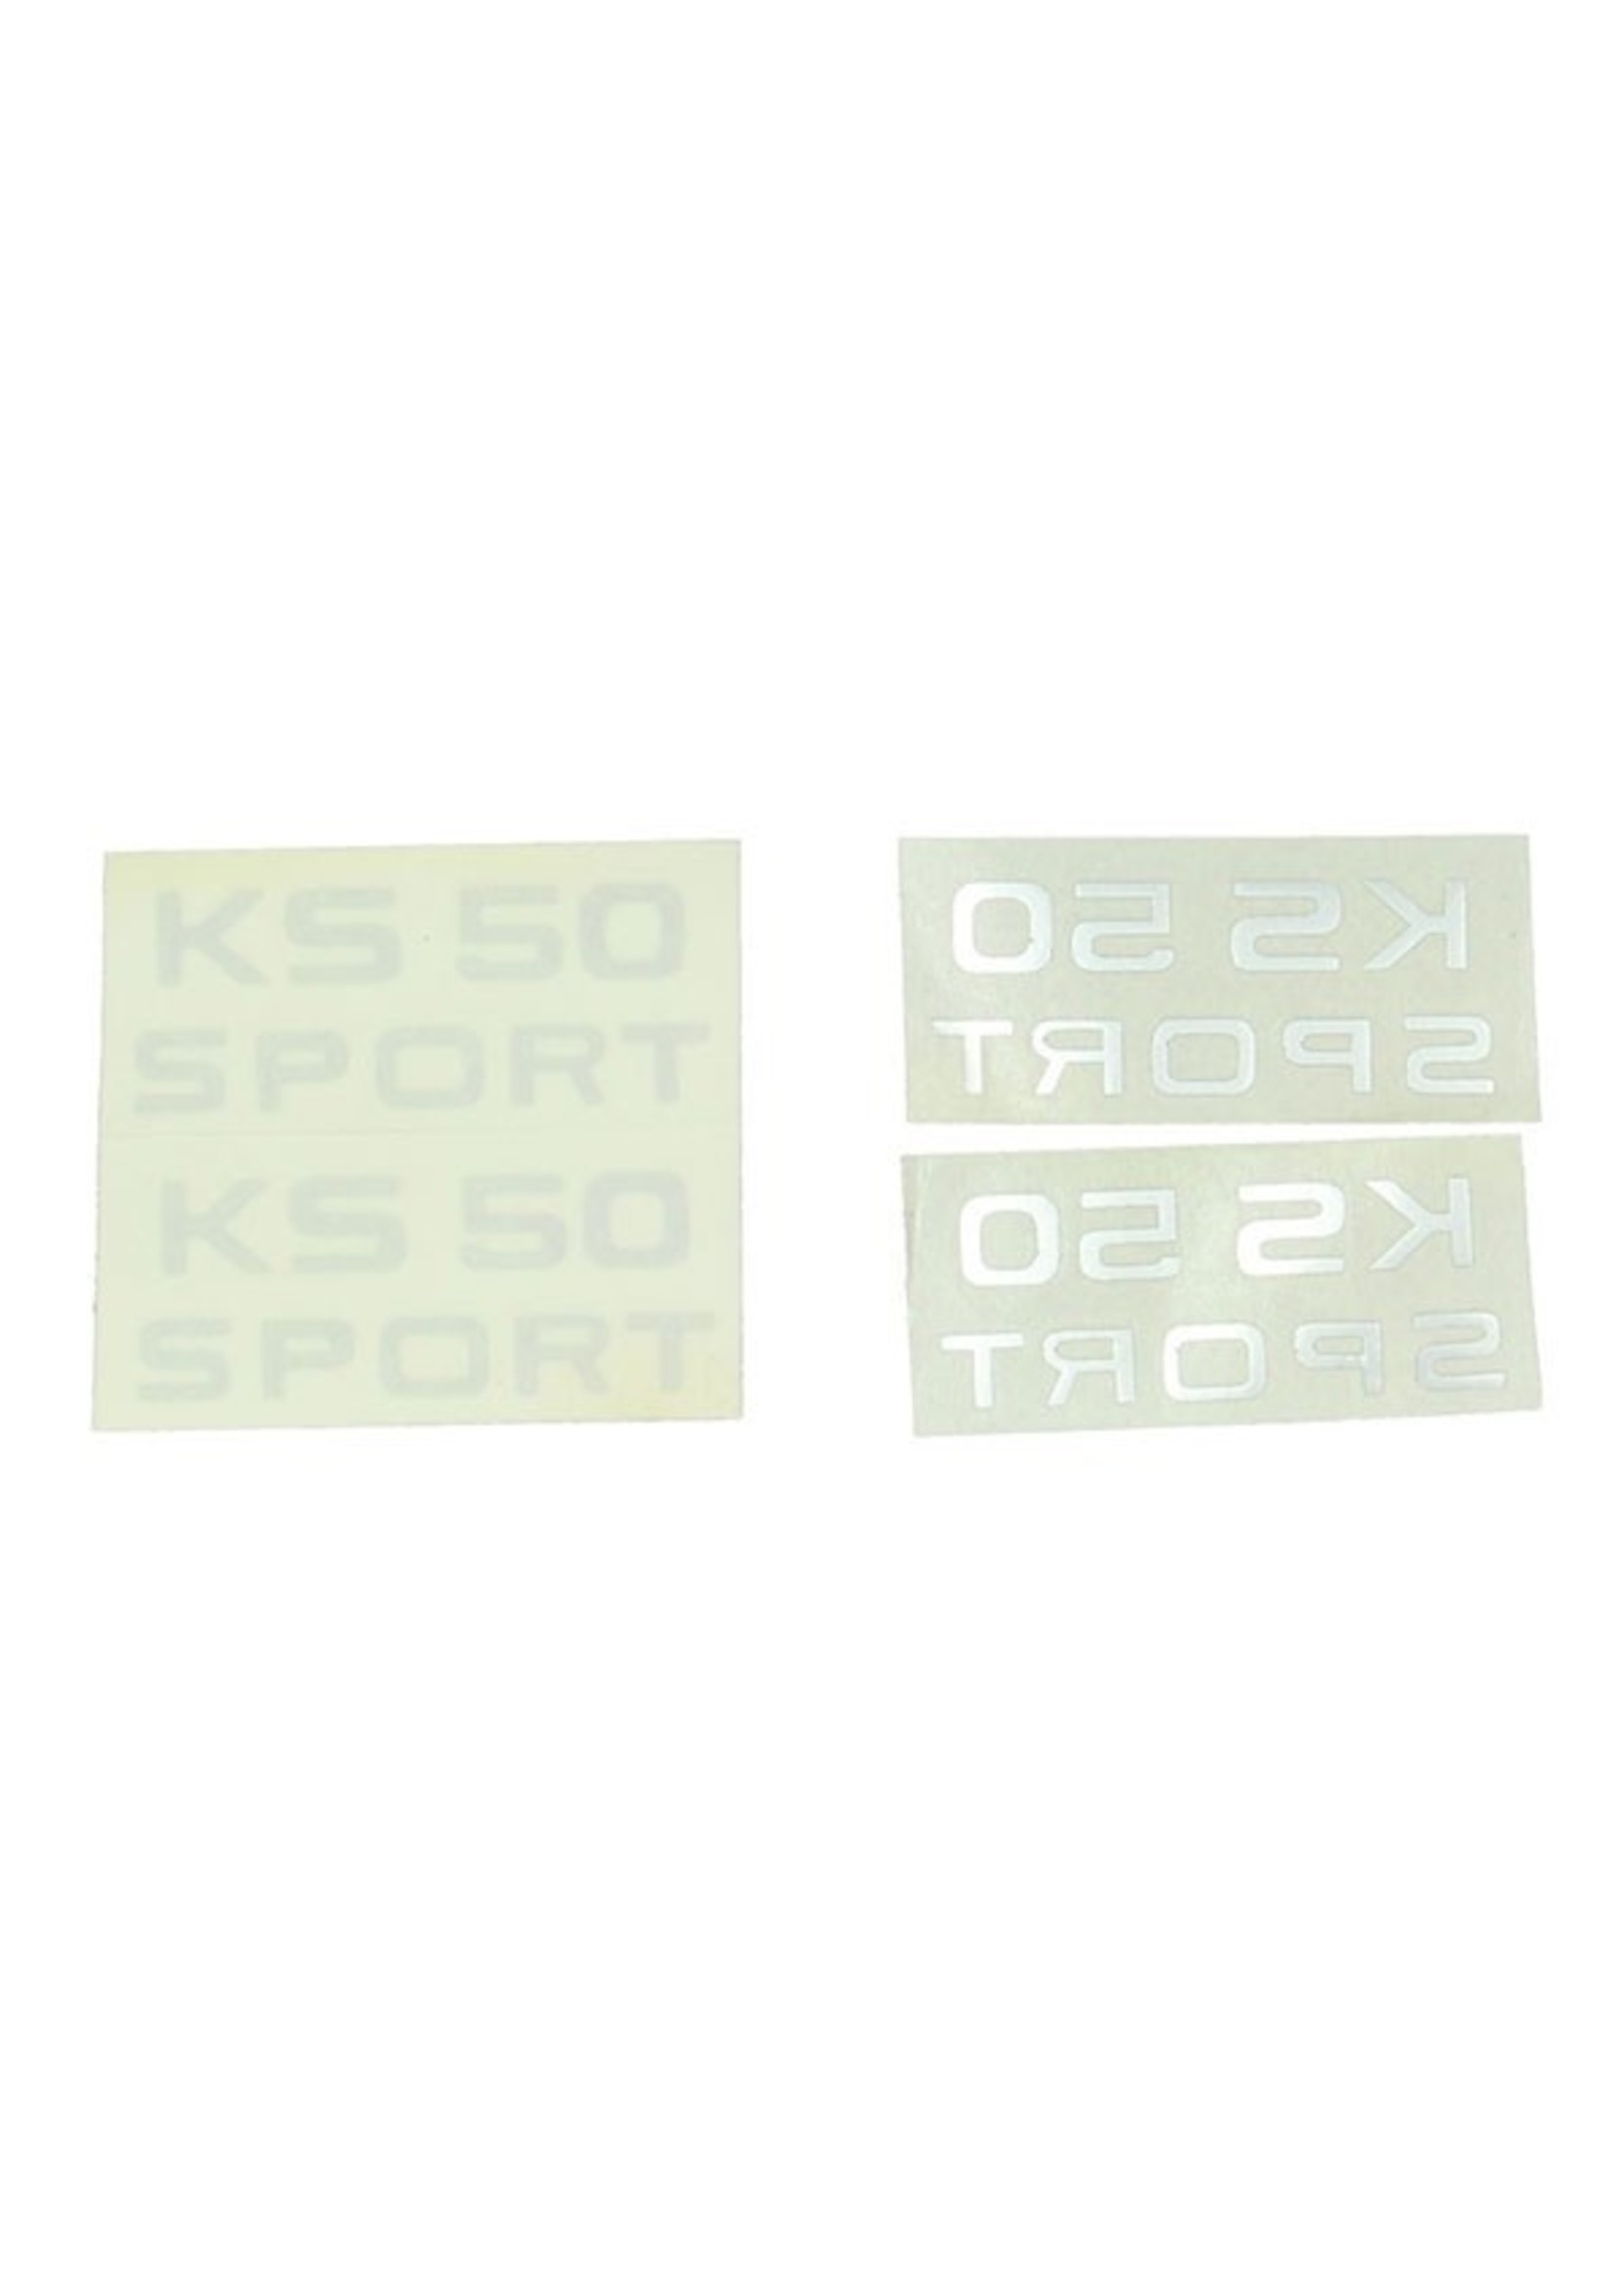 Zundapp sticker ks50 sport zilver